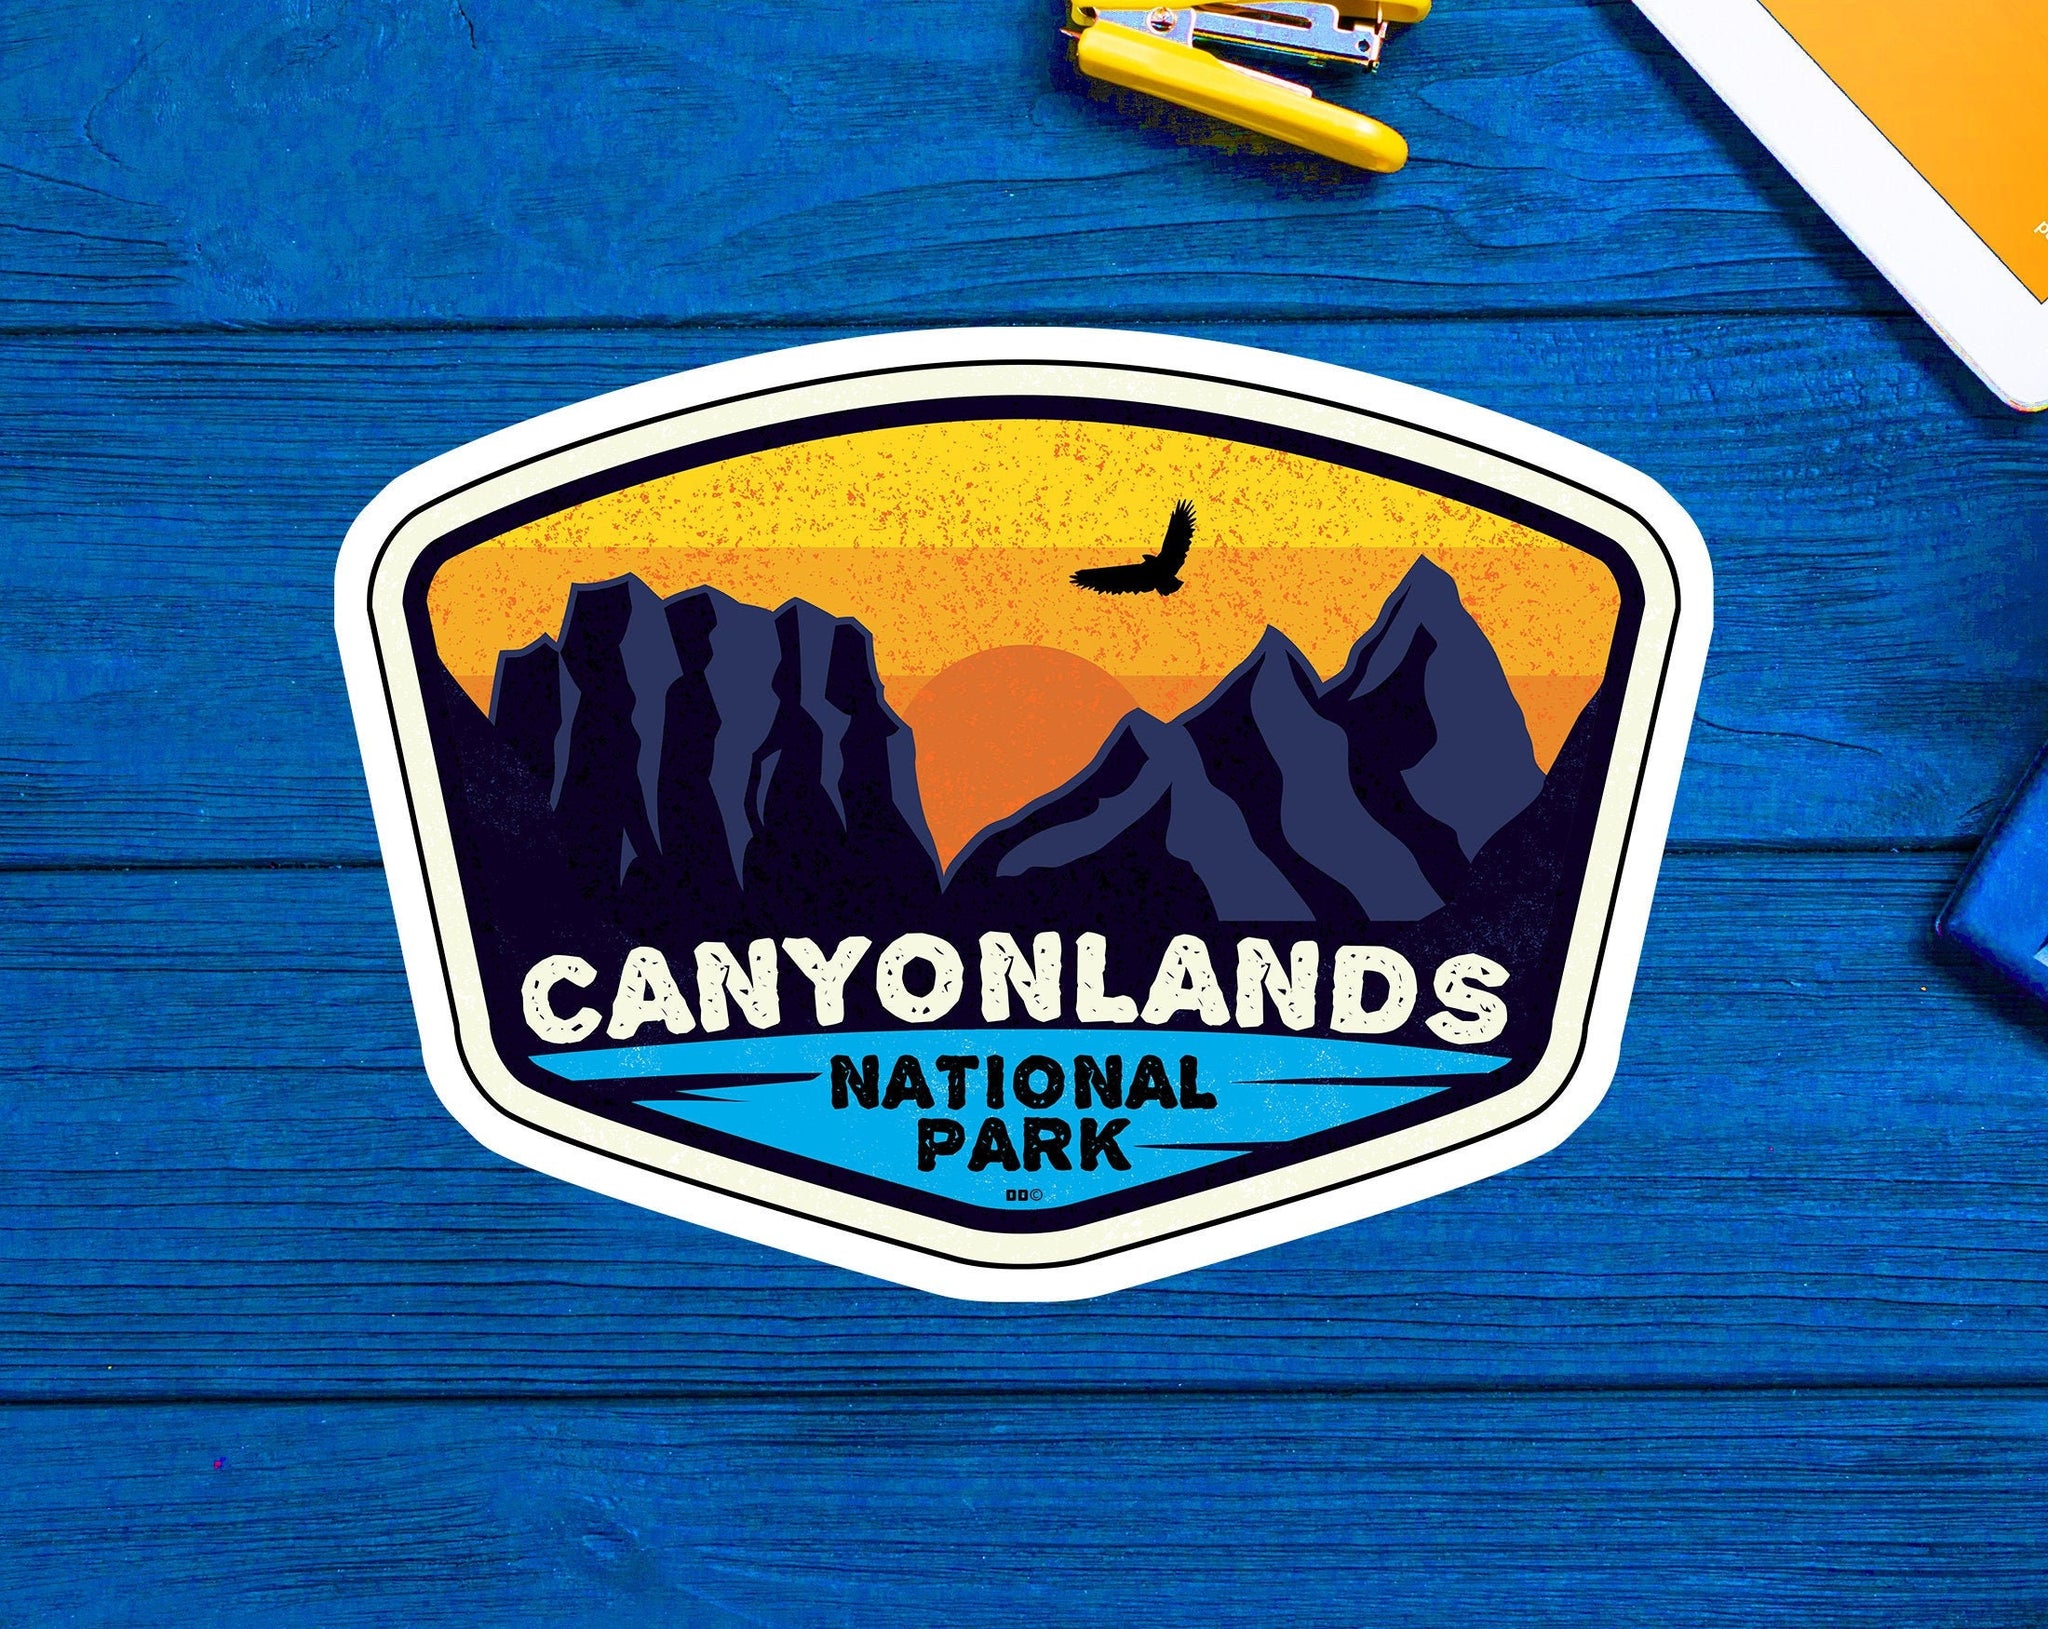 Canyonlands National Park Utah Sticker 3.75" x 2.75" Vinyl Decal